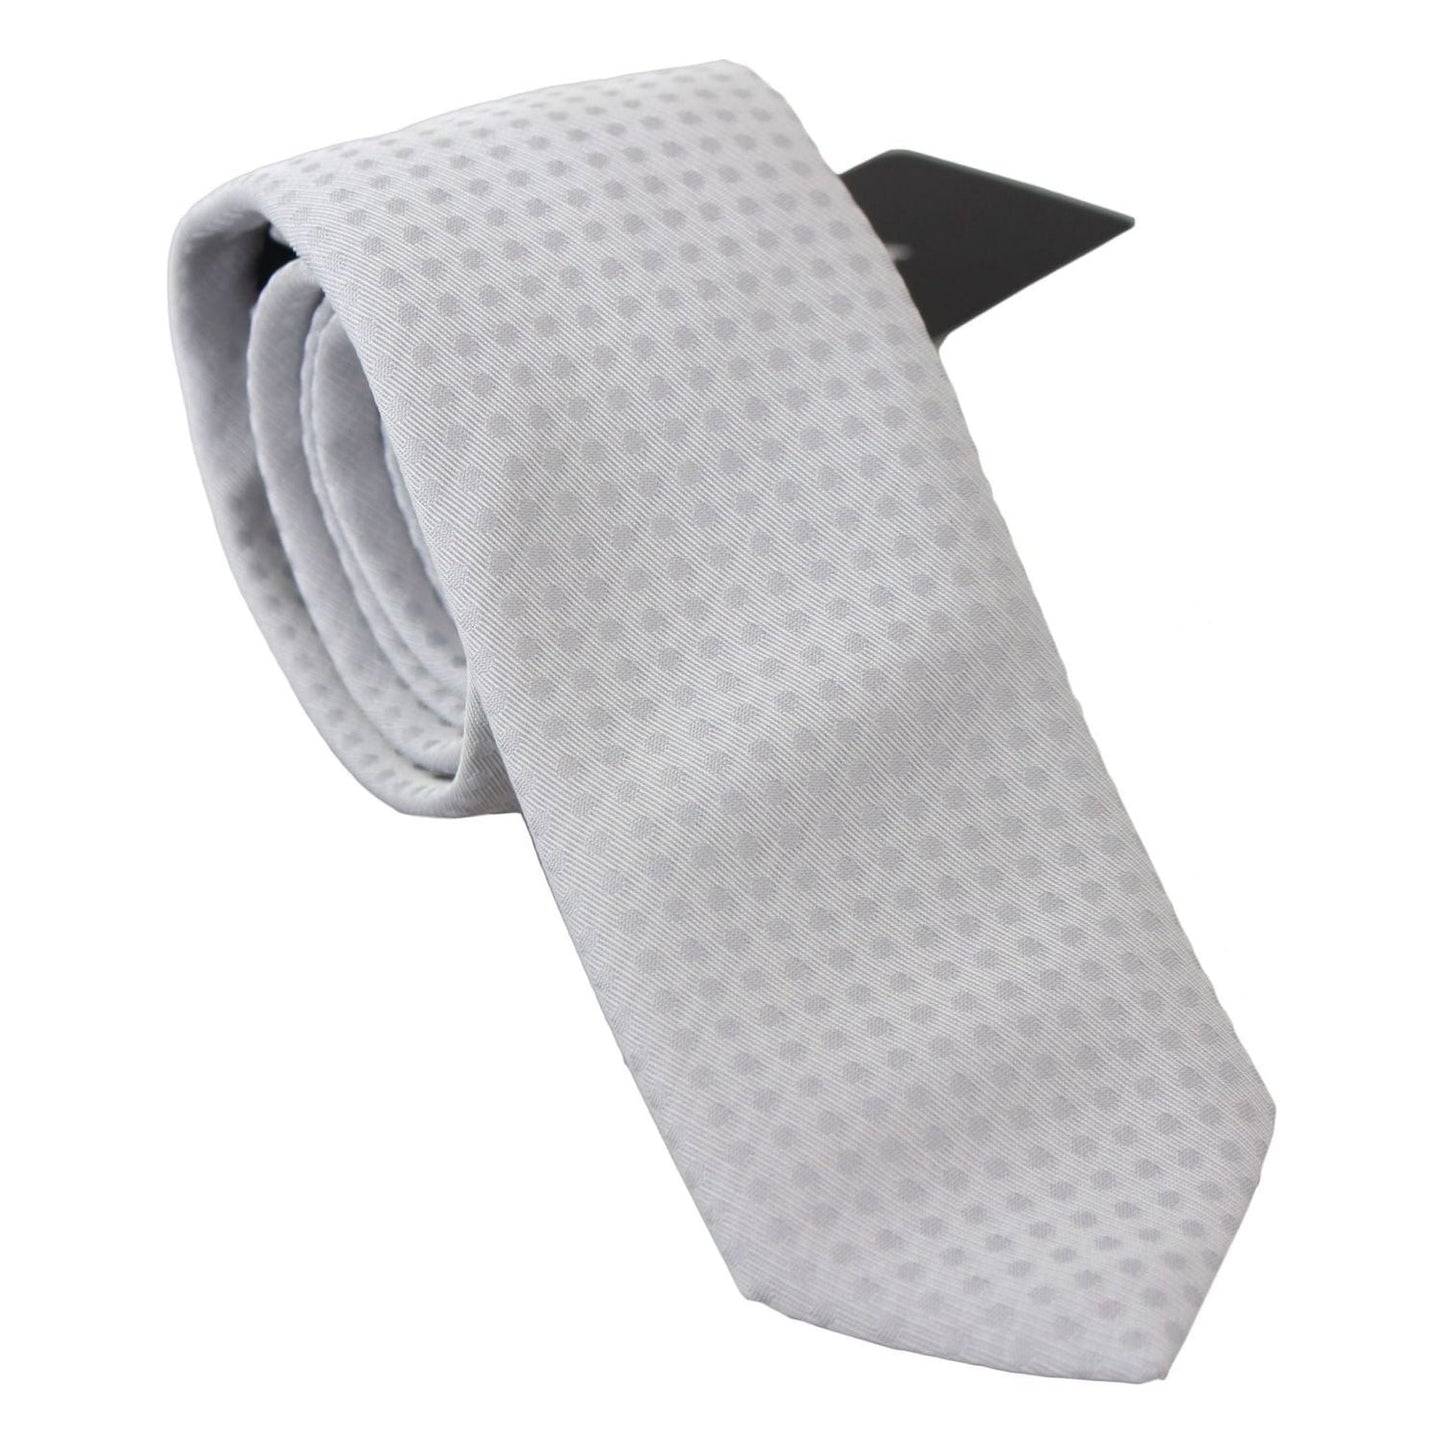 Dolce & Gabbana Elegant White Patterned Silk Blend Neck Tie white-patterned-classic-mens-slim-necktie-tie Necktie IMG_1756-scaled-b073d9d0-8b5.jpg